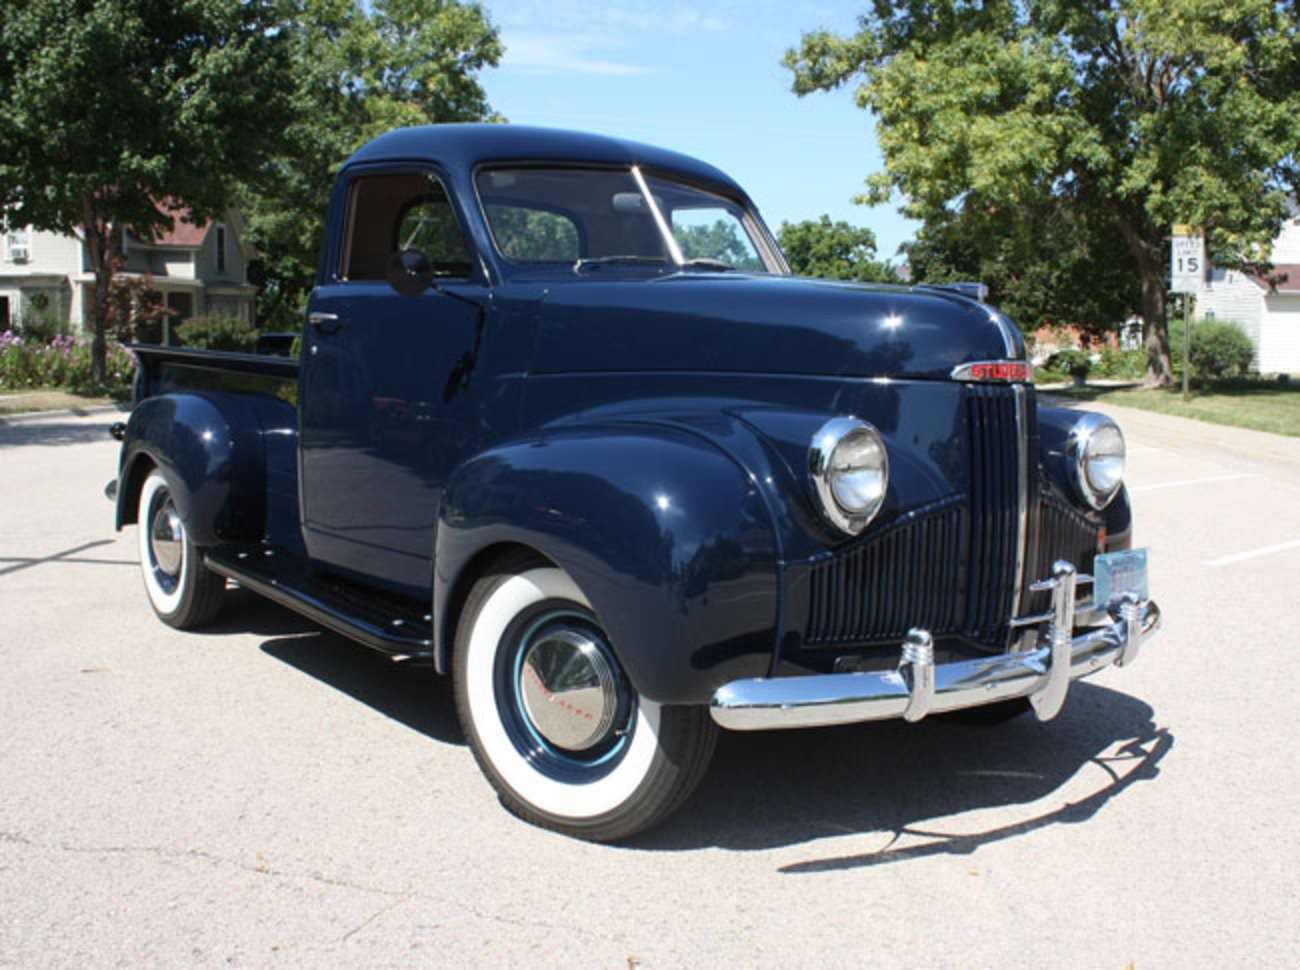 Voiture de la semaine : pick-up Studebaker 1947